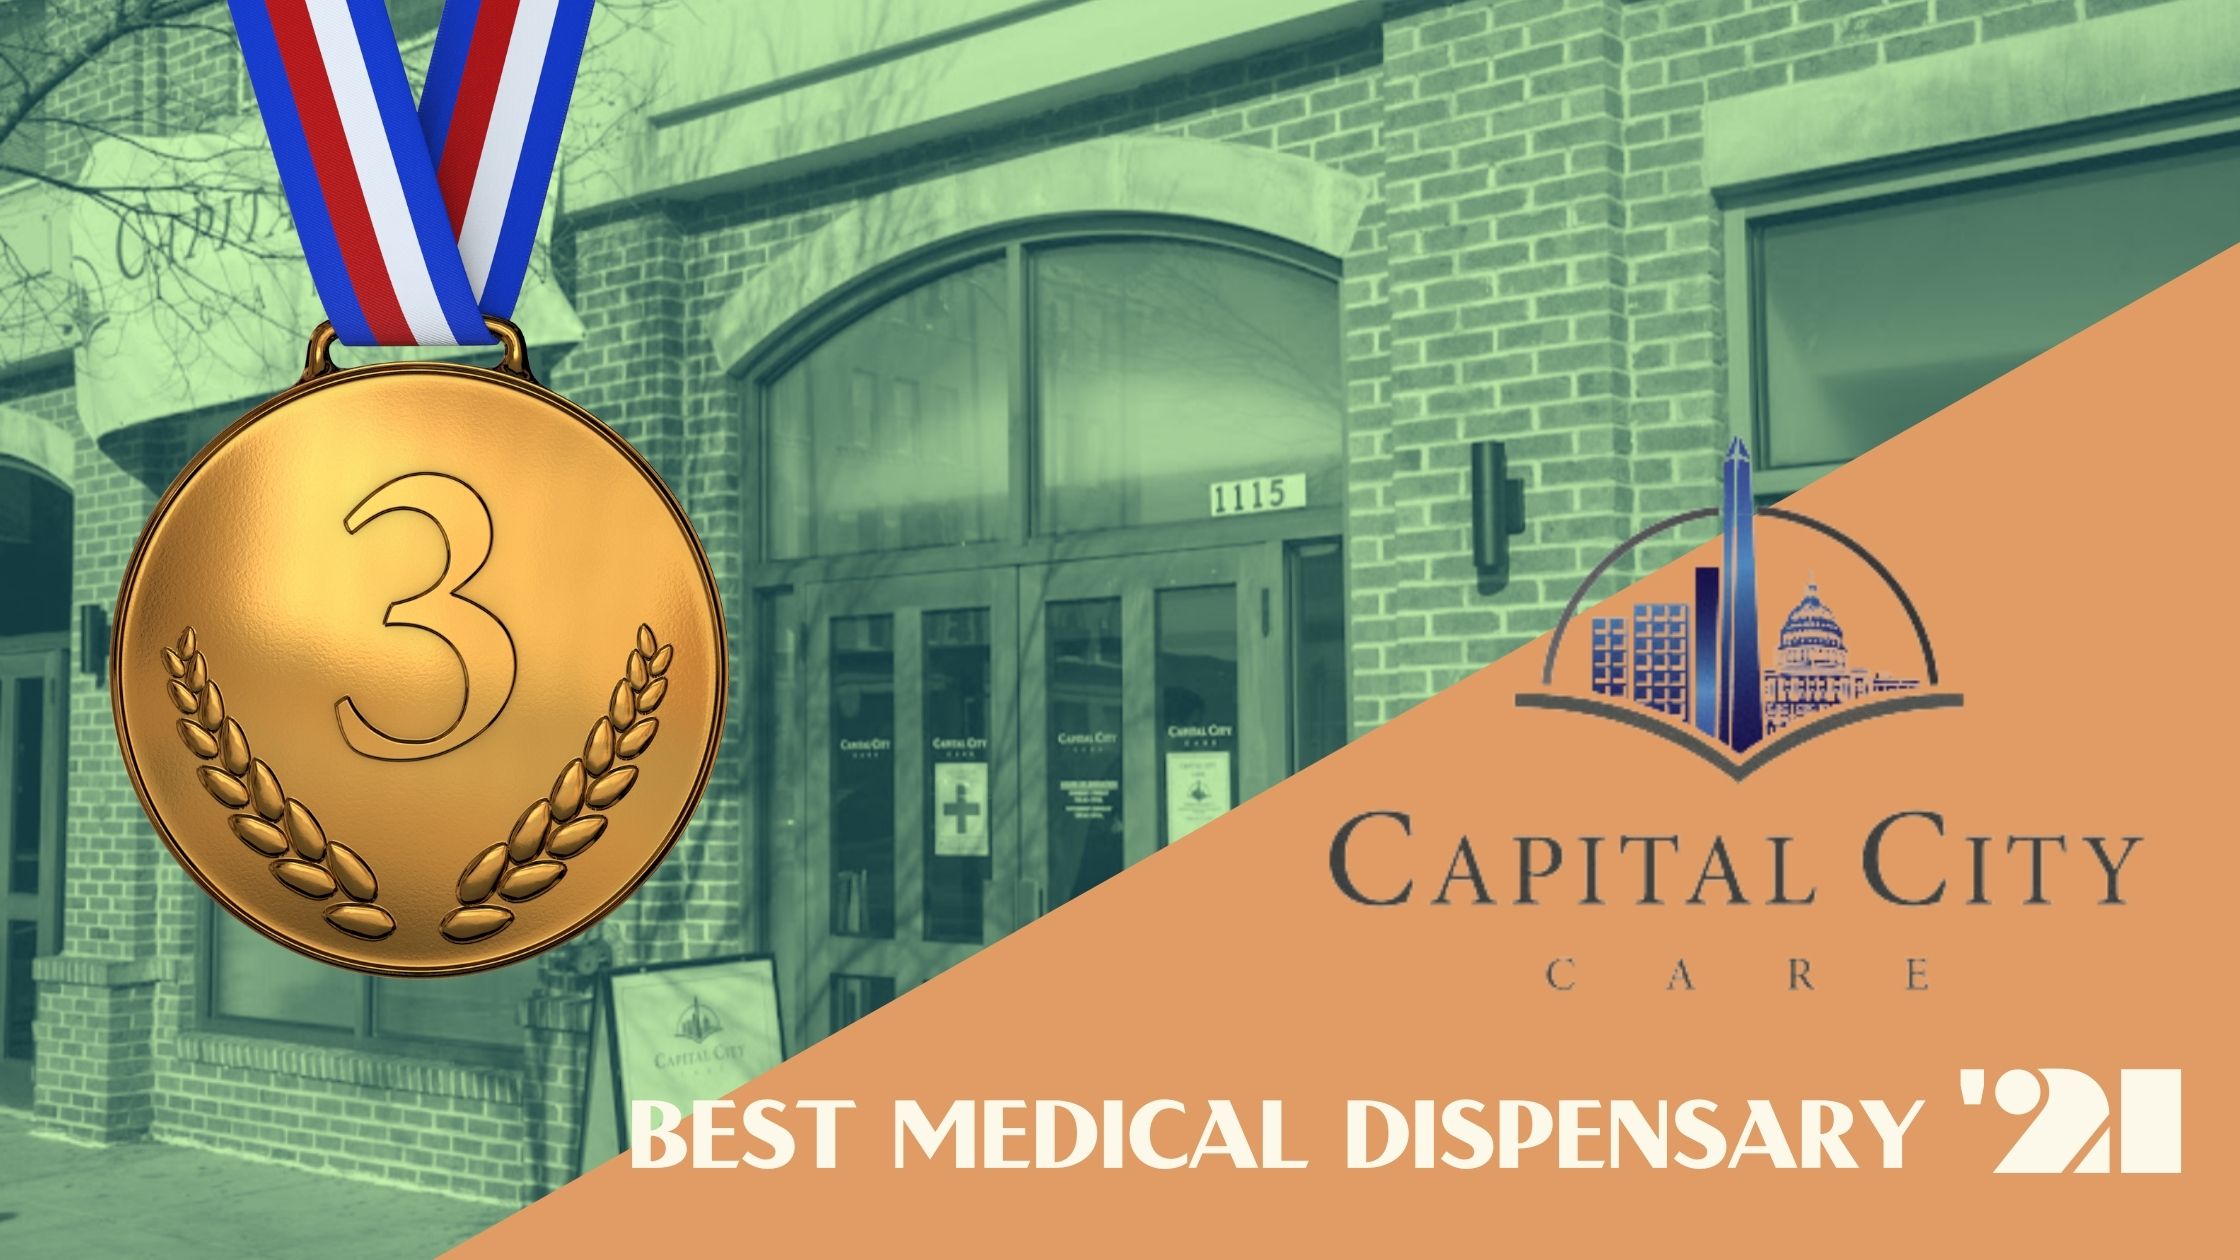 Best Medical Dispensary capital city care